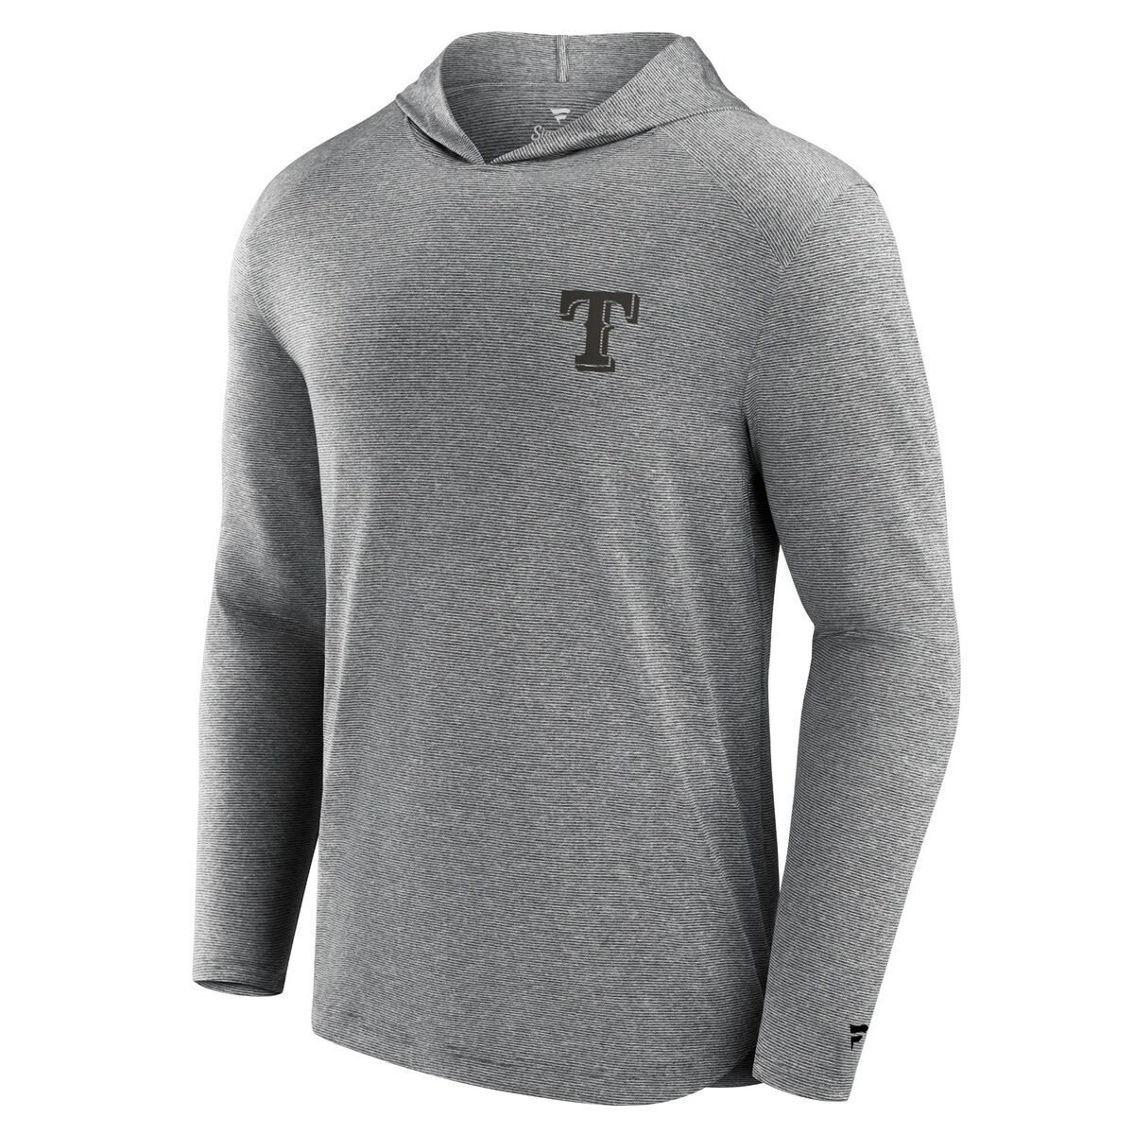 Men's Fanatics Signature Black Texas Rangers Lightweight Hoodie T-Shirt - Image 3 of 4